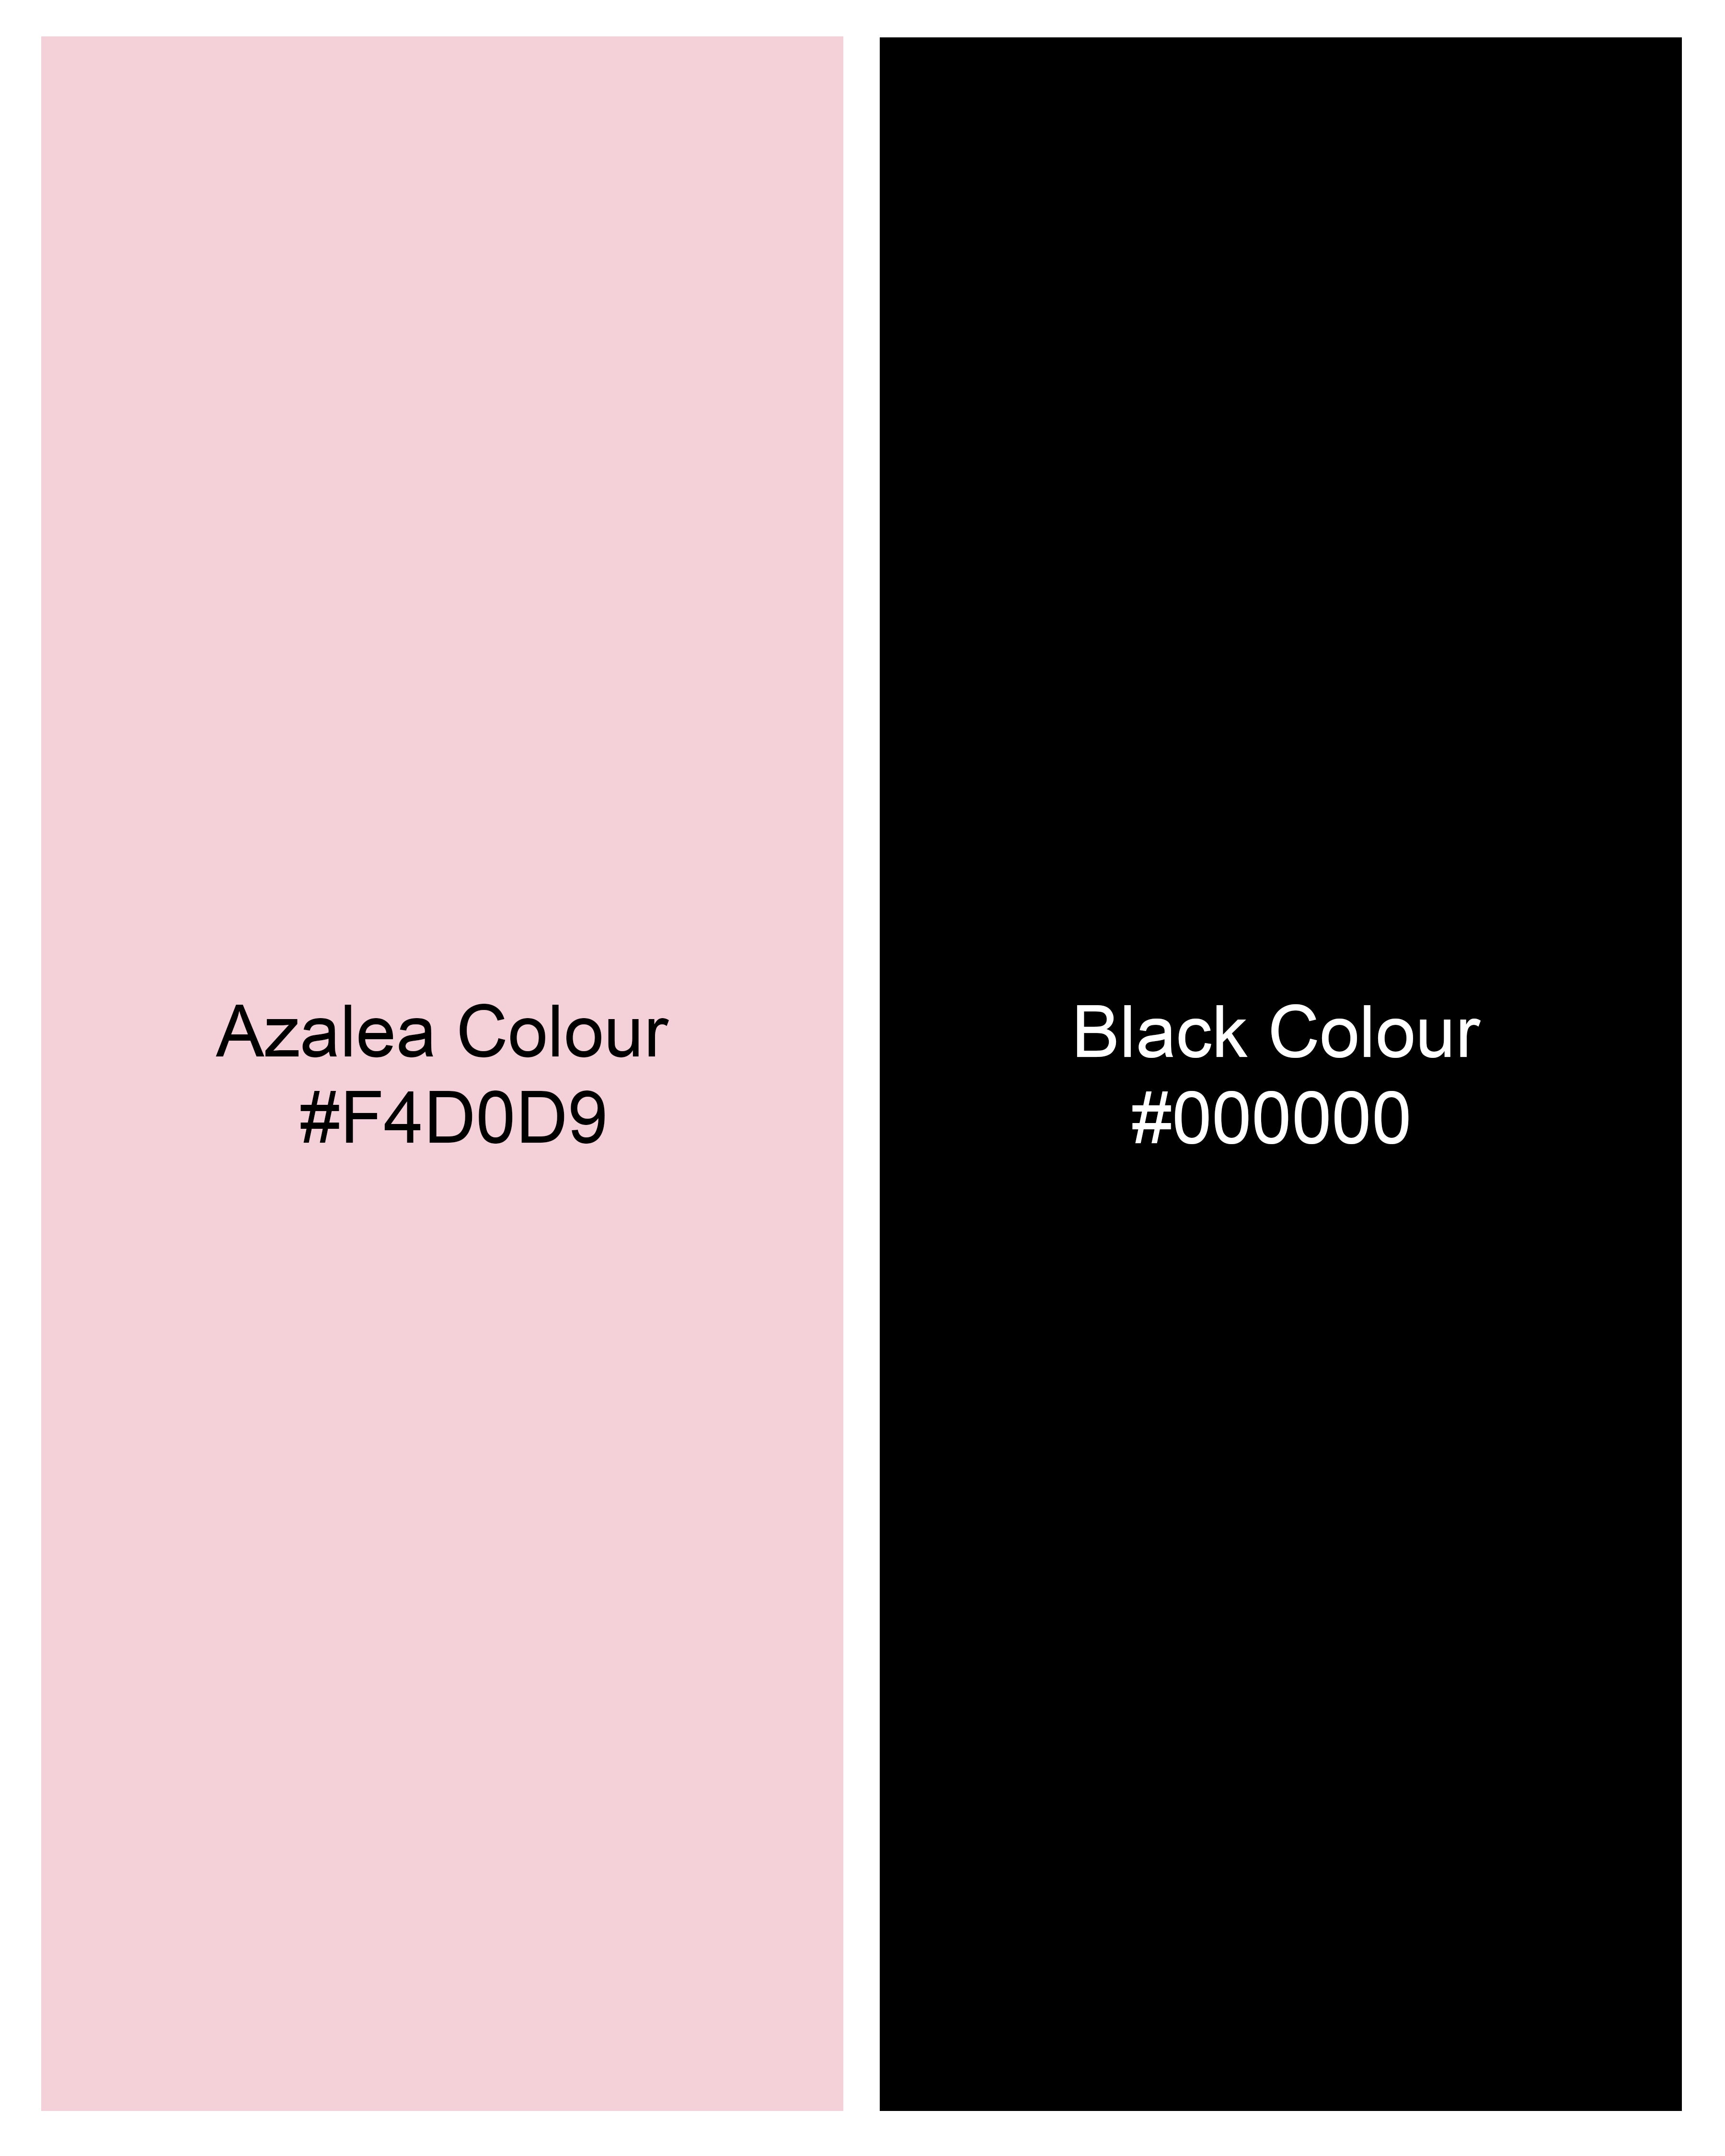 Azalea Pink with Black Textured Super Soft Premium Cotton Shirt 9860-38, 9860-H-38, 9860-39, 9860-H-39, 9860-40, 9860-H-40, 9860-42, 9860-H-42, 9860-44, 9860-H-44, 9860-46, 9860-H-46, 9860-48, 9860-H-48, 9860-50, 9860-H-50, 9860-52, 9860-H-52